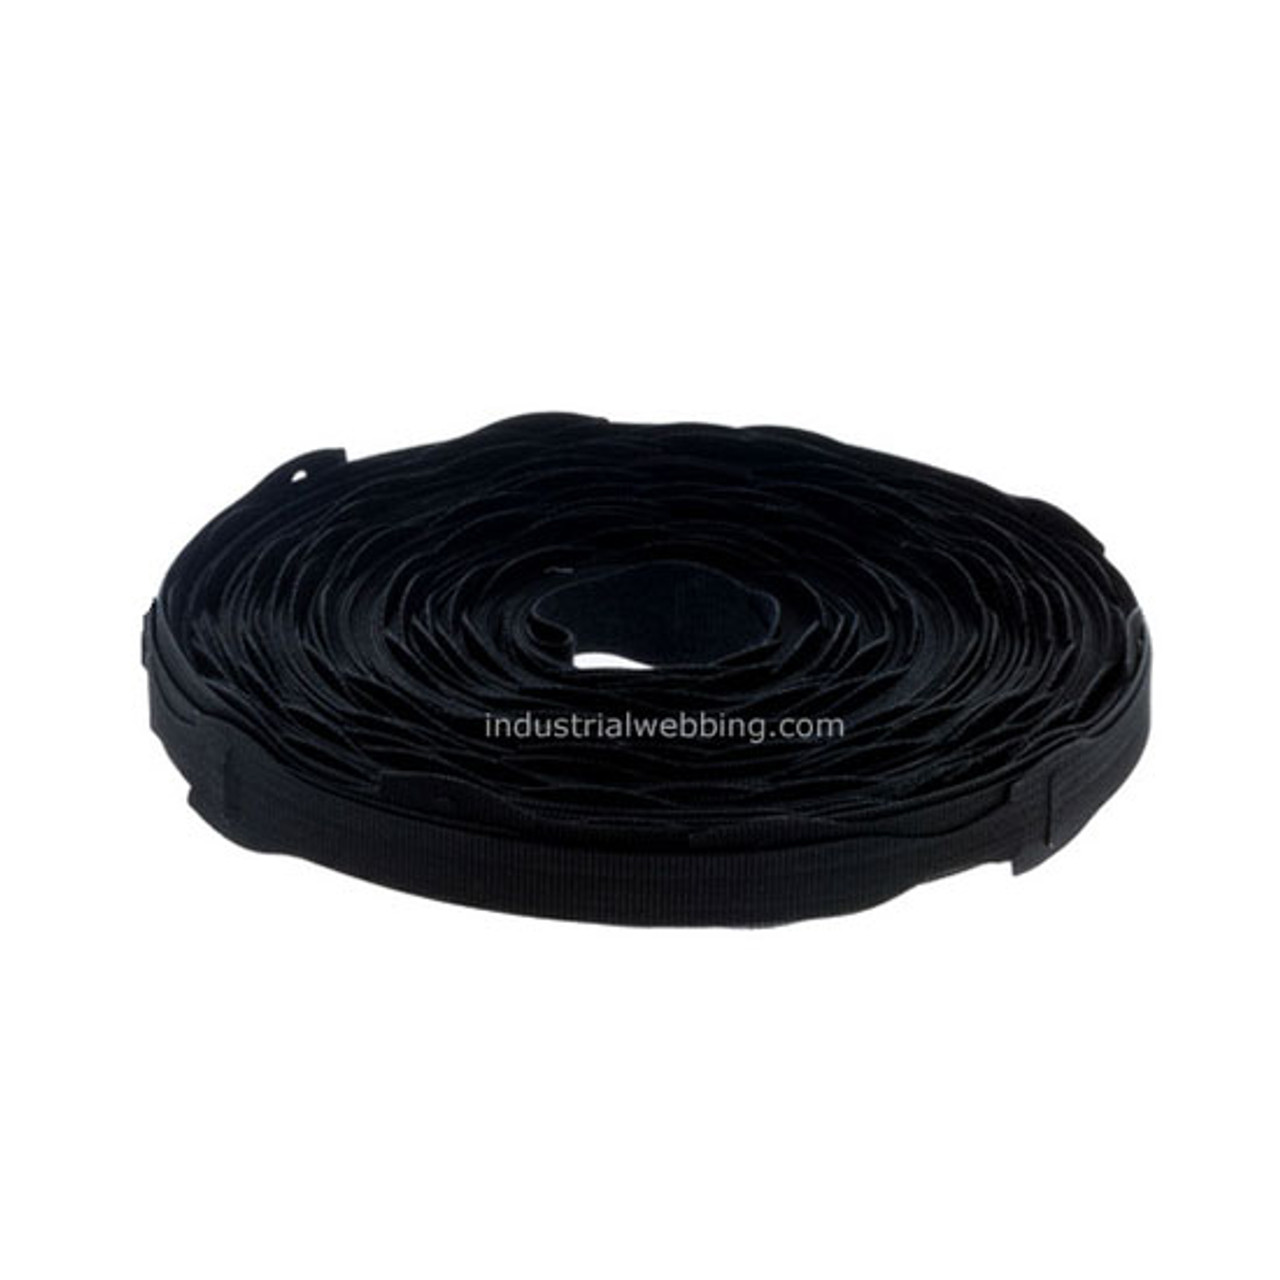 VELCRO® Brand Qwik Tie Straps - 3/4 x 8 Roll- Black or White